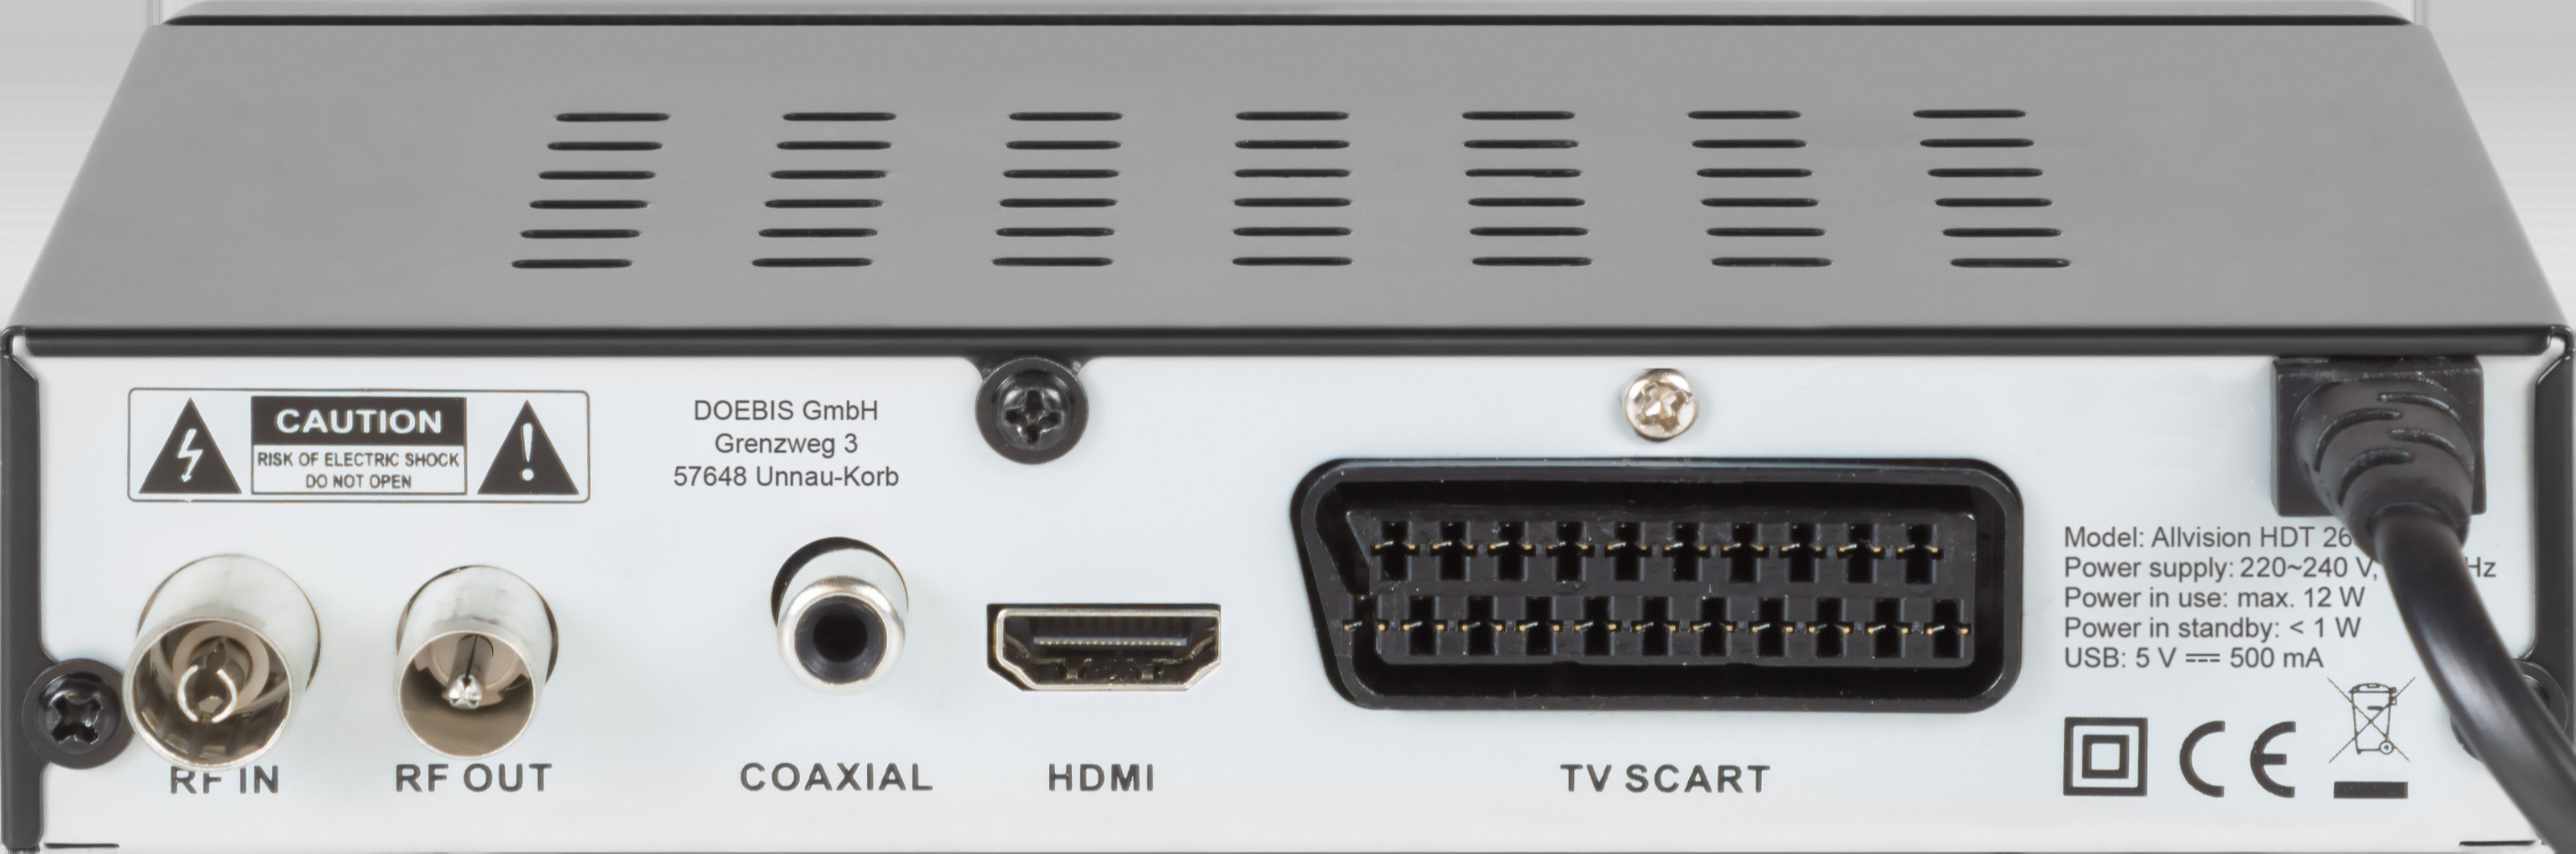 HD, DVB-T2 Schwarz) Receiver ALLVISION 2650 DVB-T2 HD HDT (HDTV,